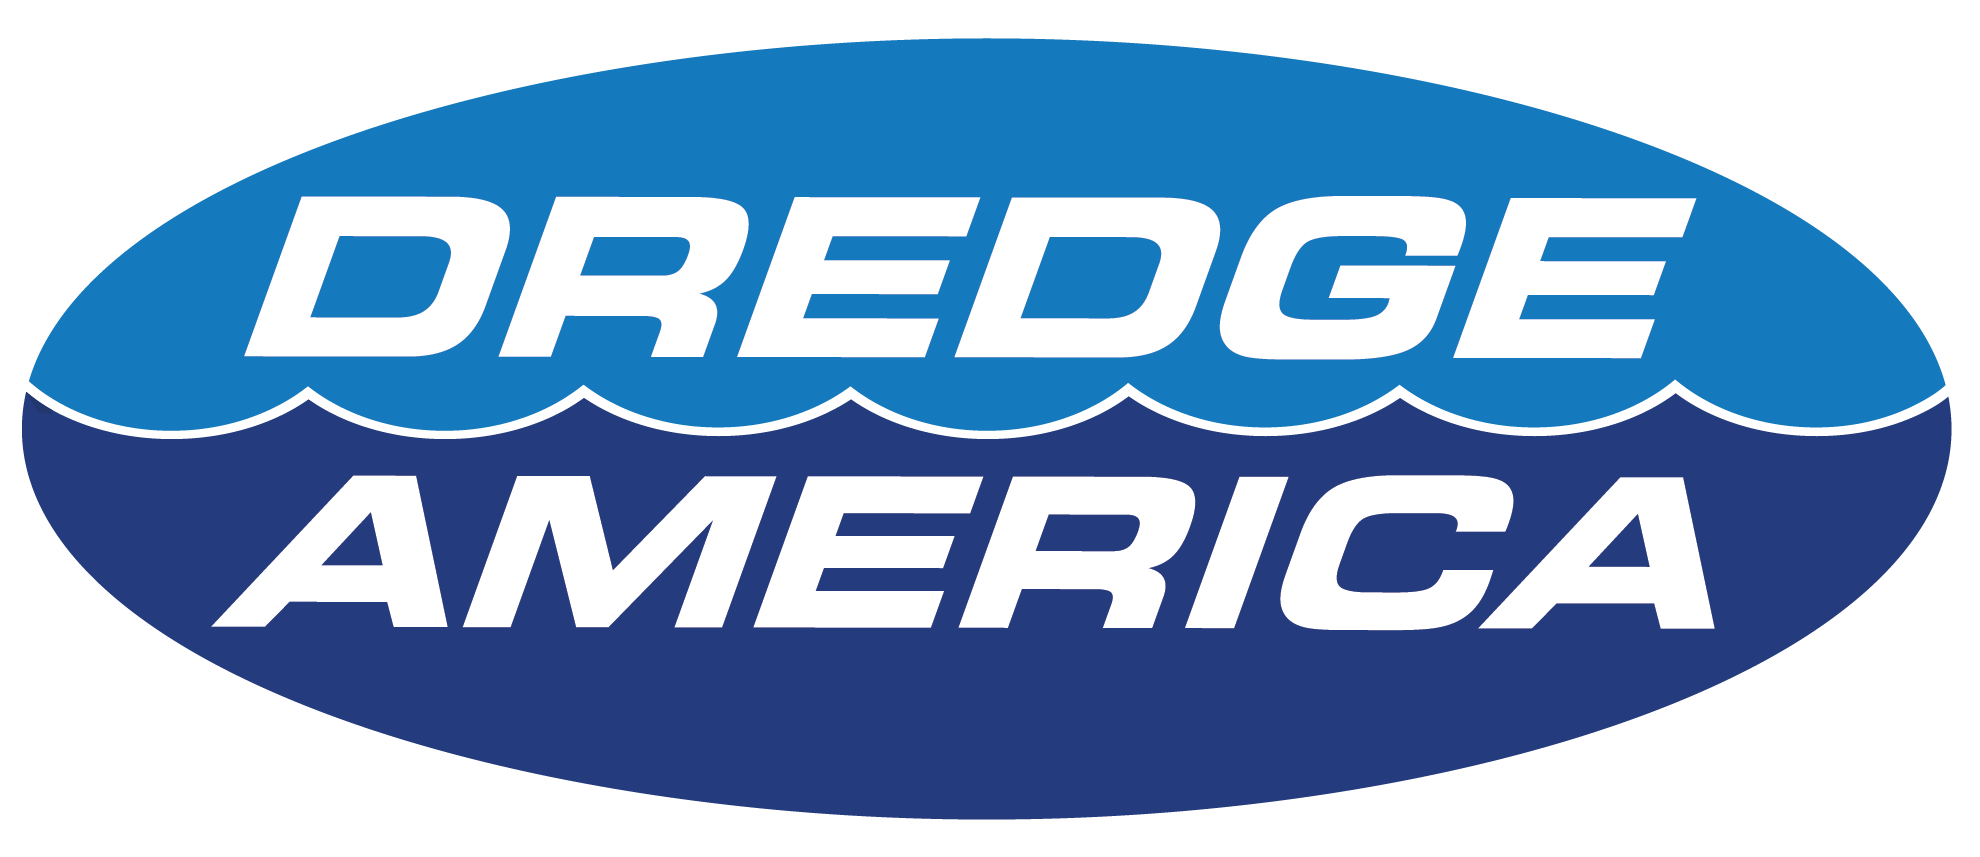 Dredge America